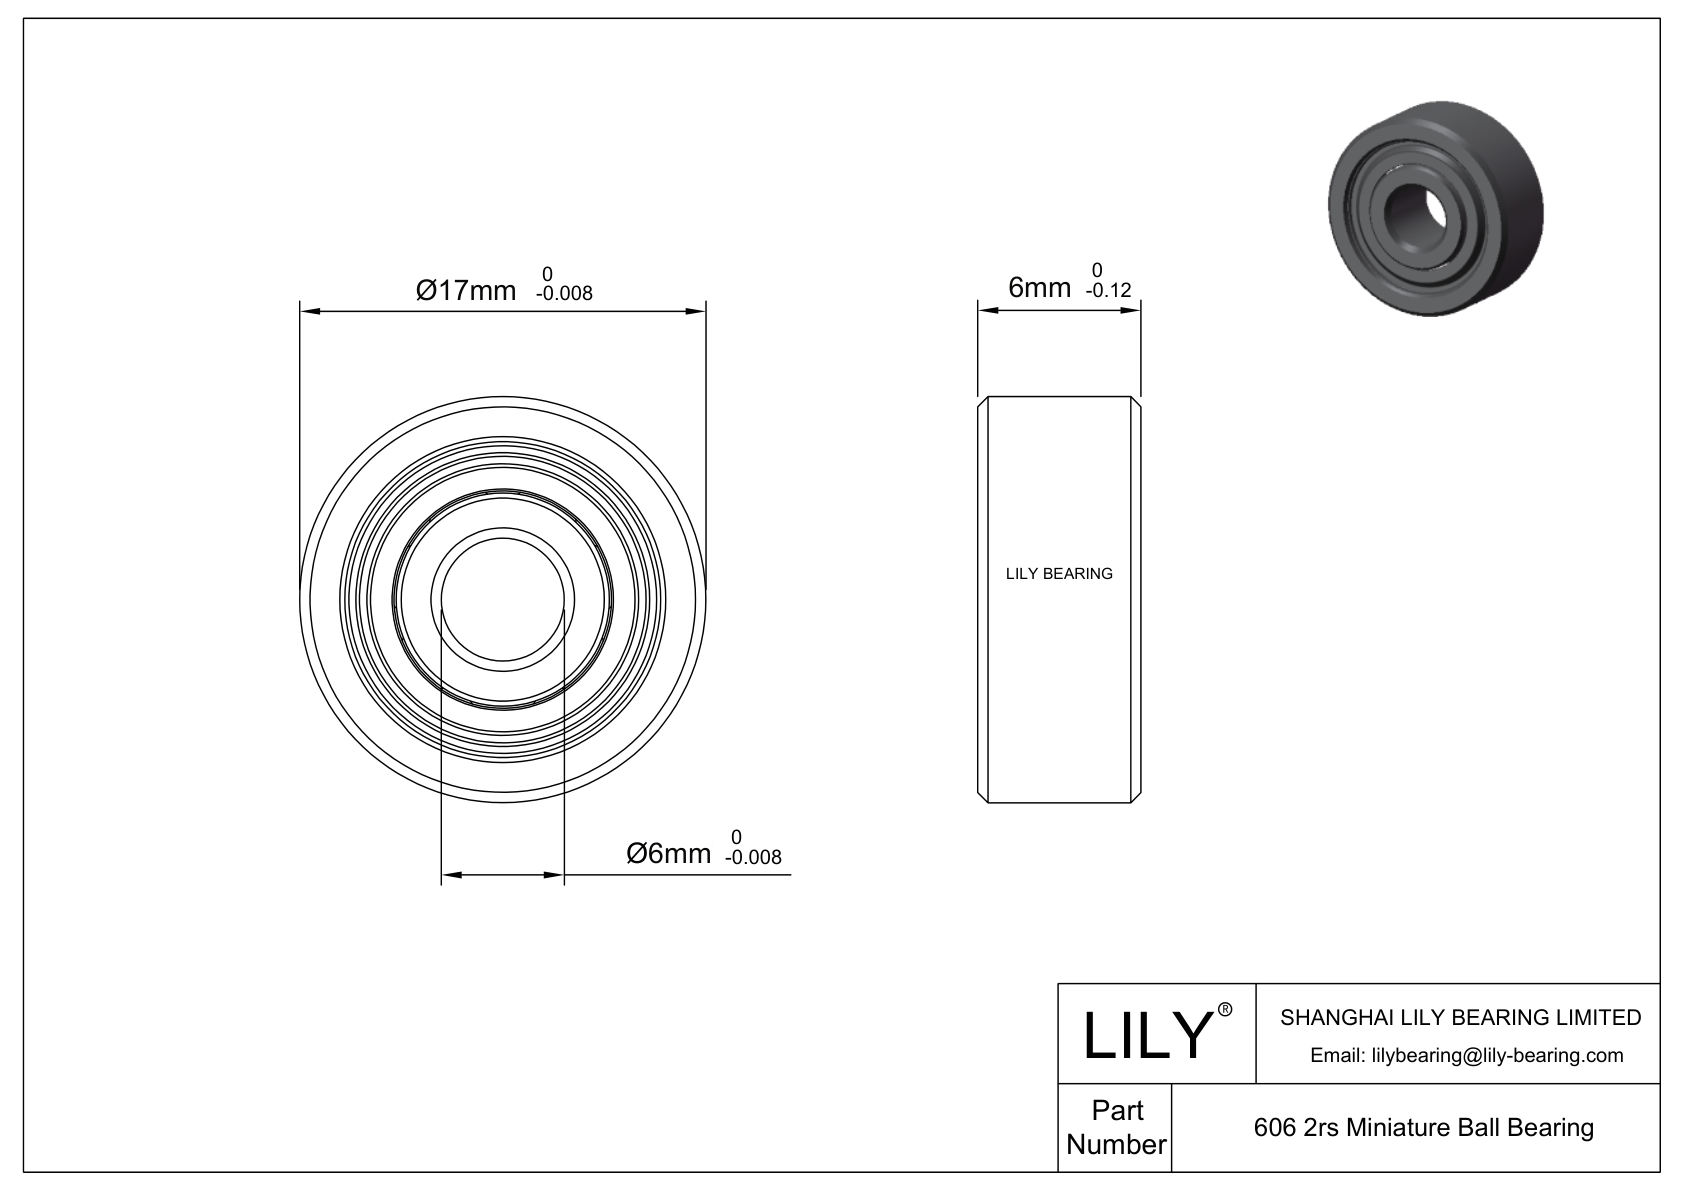 LILY-PU60624-6 Polyurethane Coated Bearing cad drawing